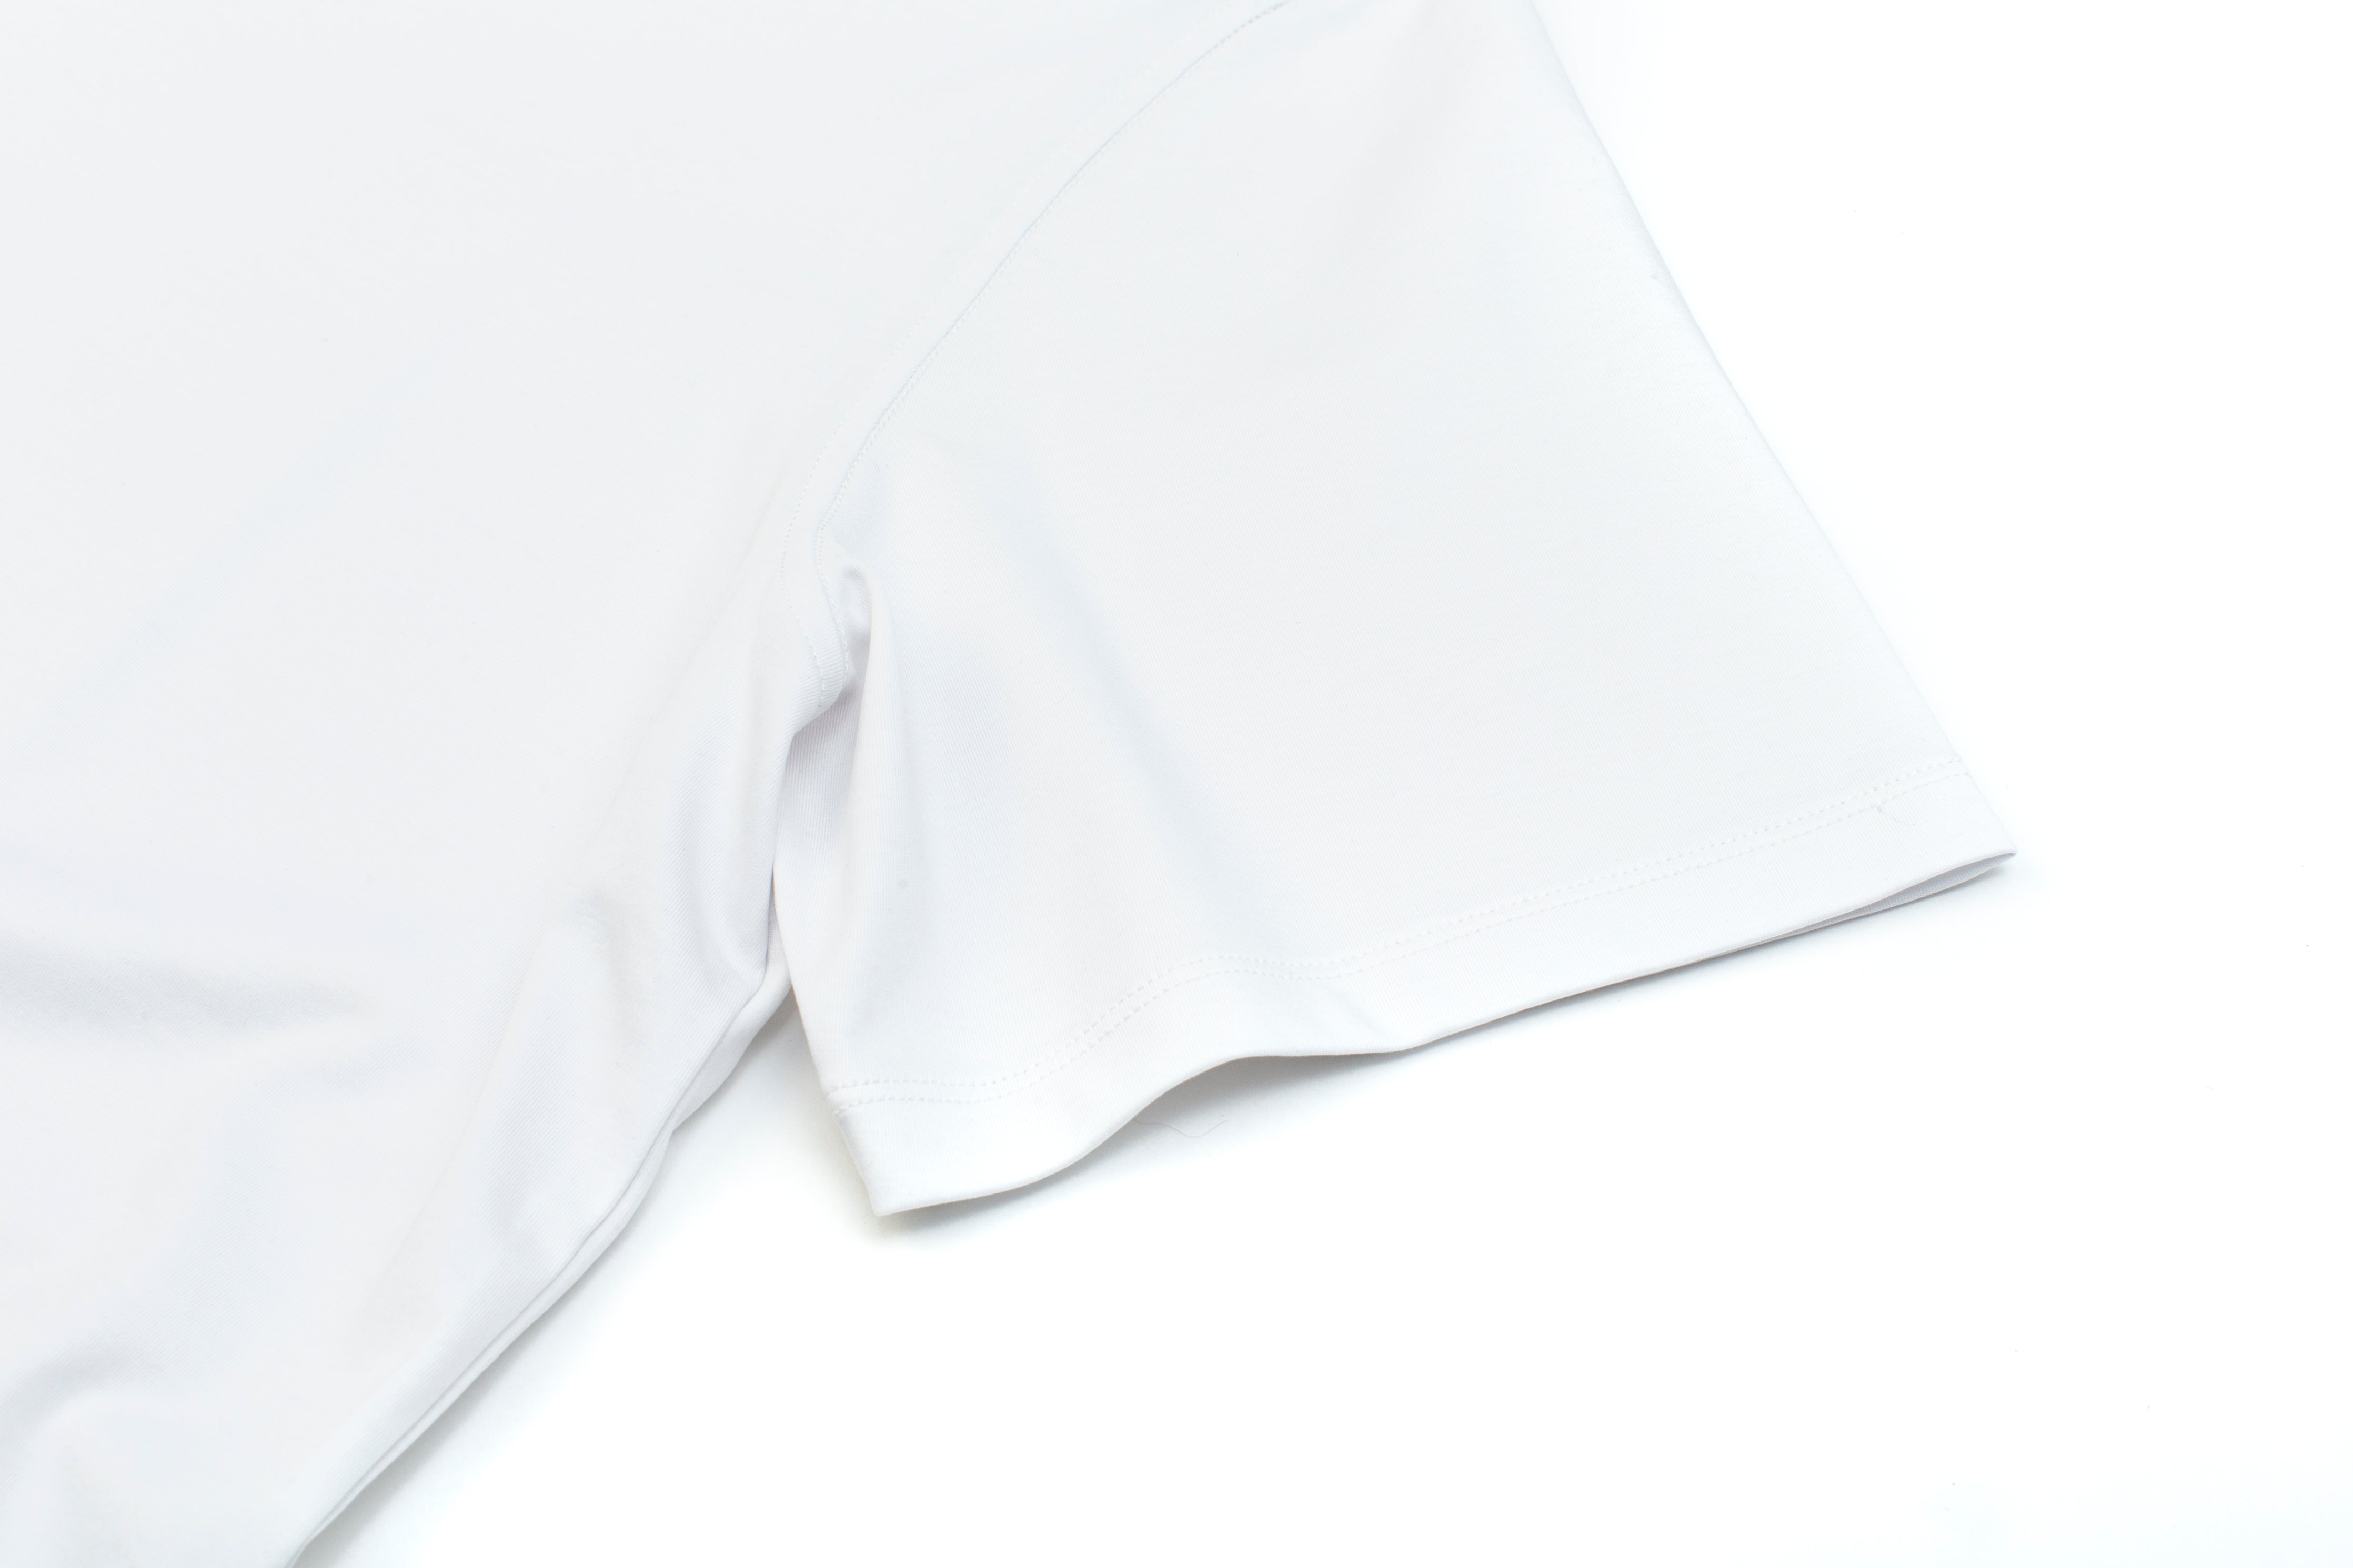 Super Fine Cotton/Spandex Short Sleeve - White